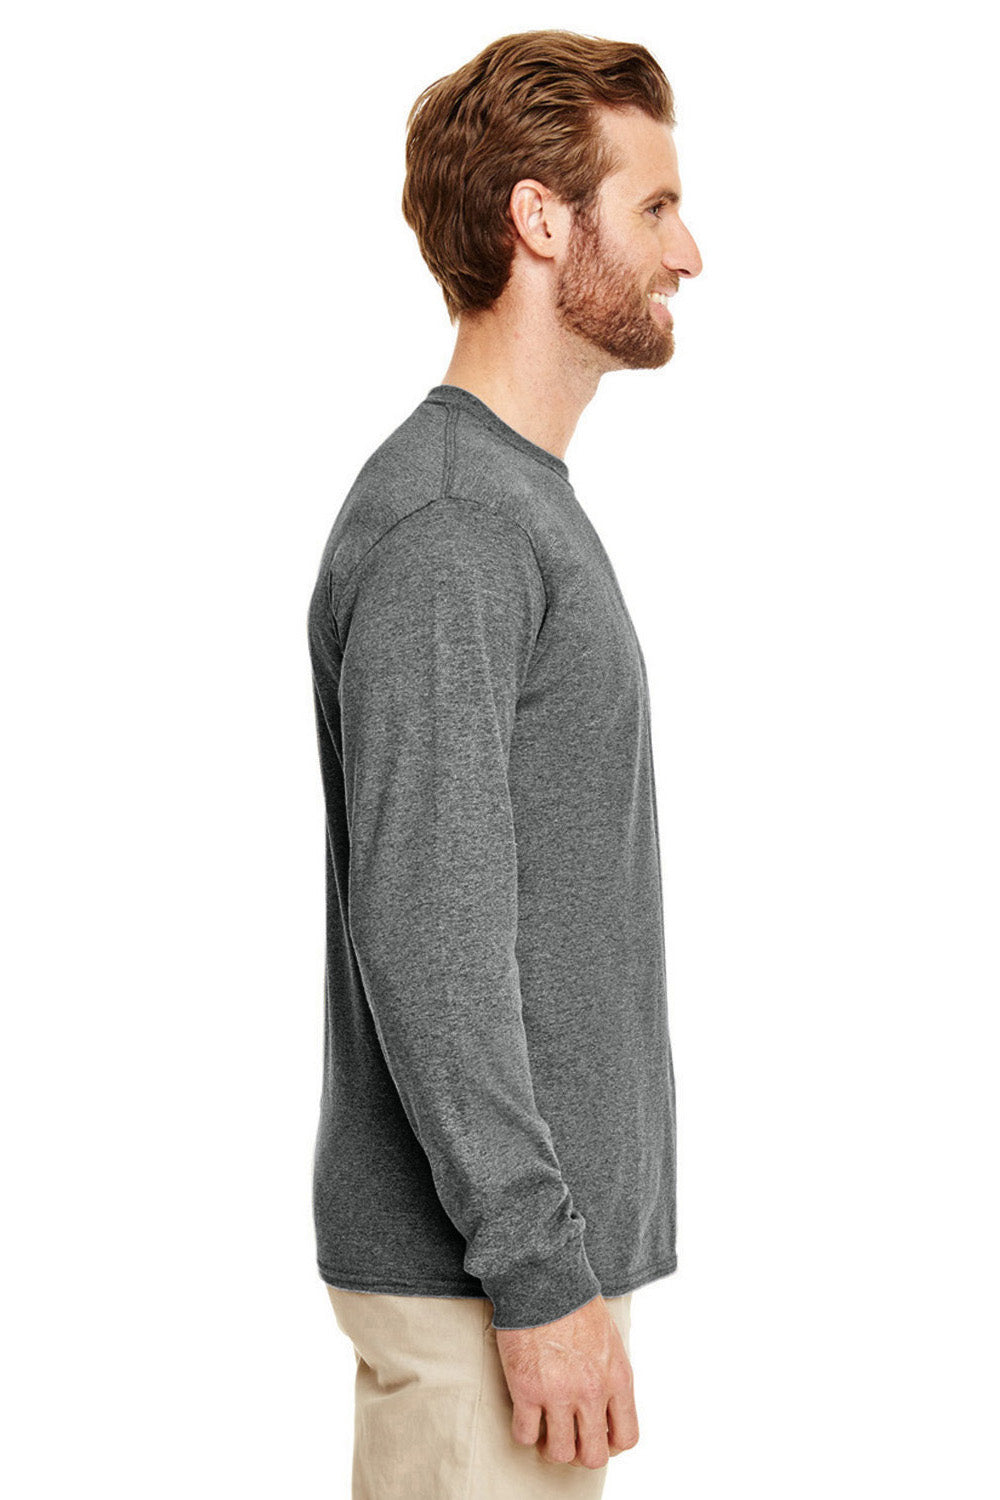 Gildan G840 Mens DryBlend Moisture Wicking Long Sleeve Crewneck T-Shirt Heather Graphite Grey Side